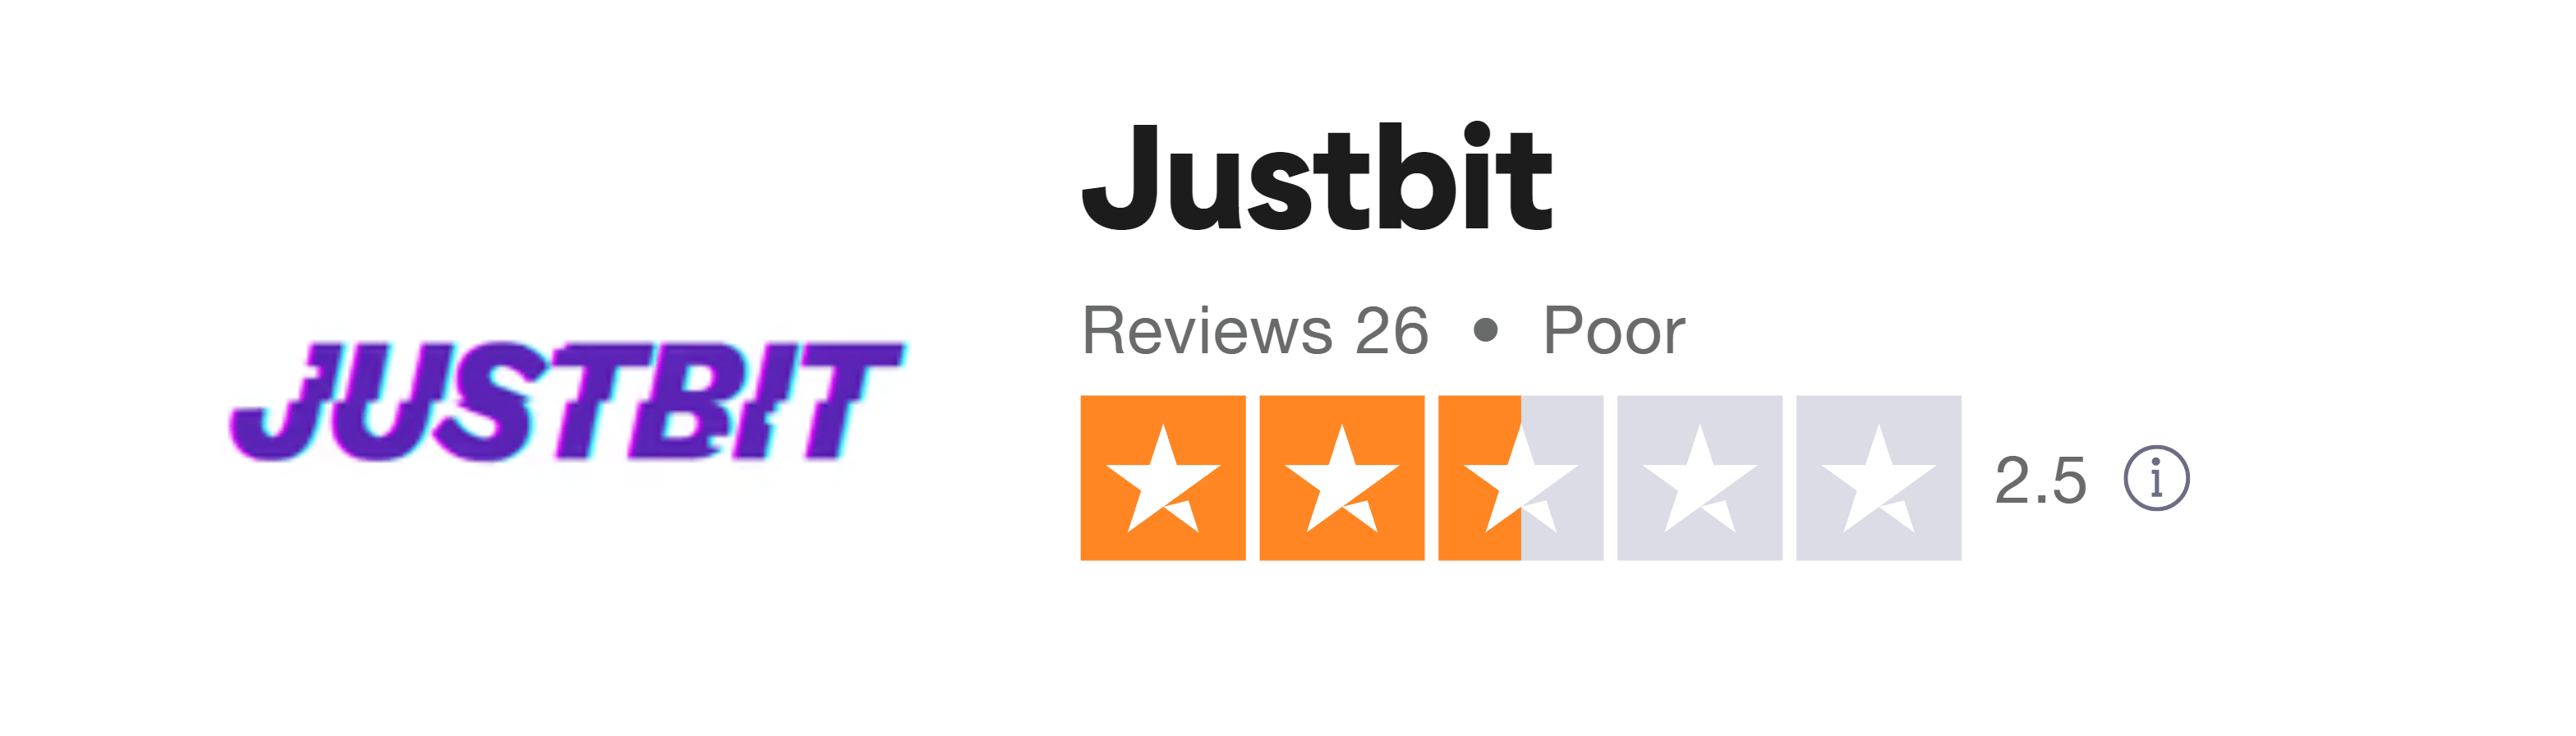 Trustpilot rating screenshot for the JustBit